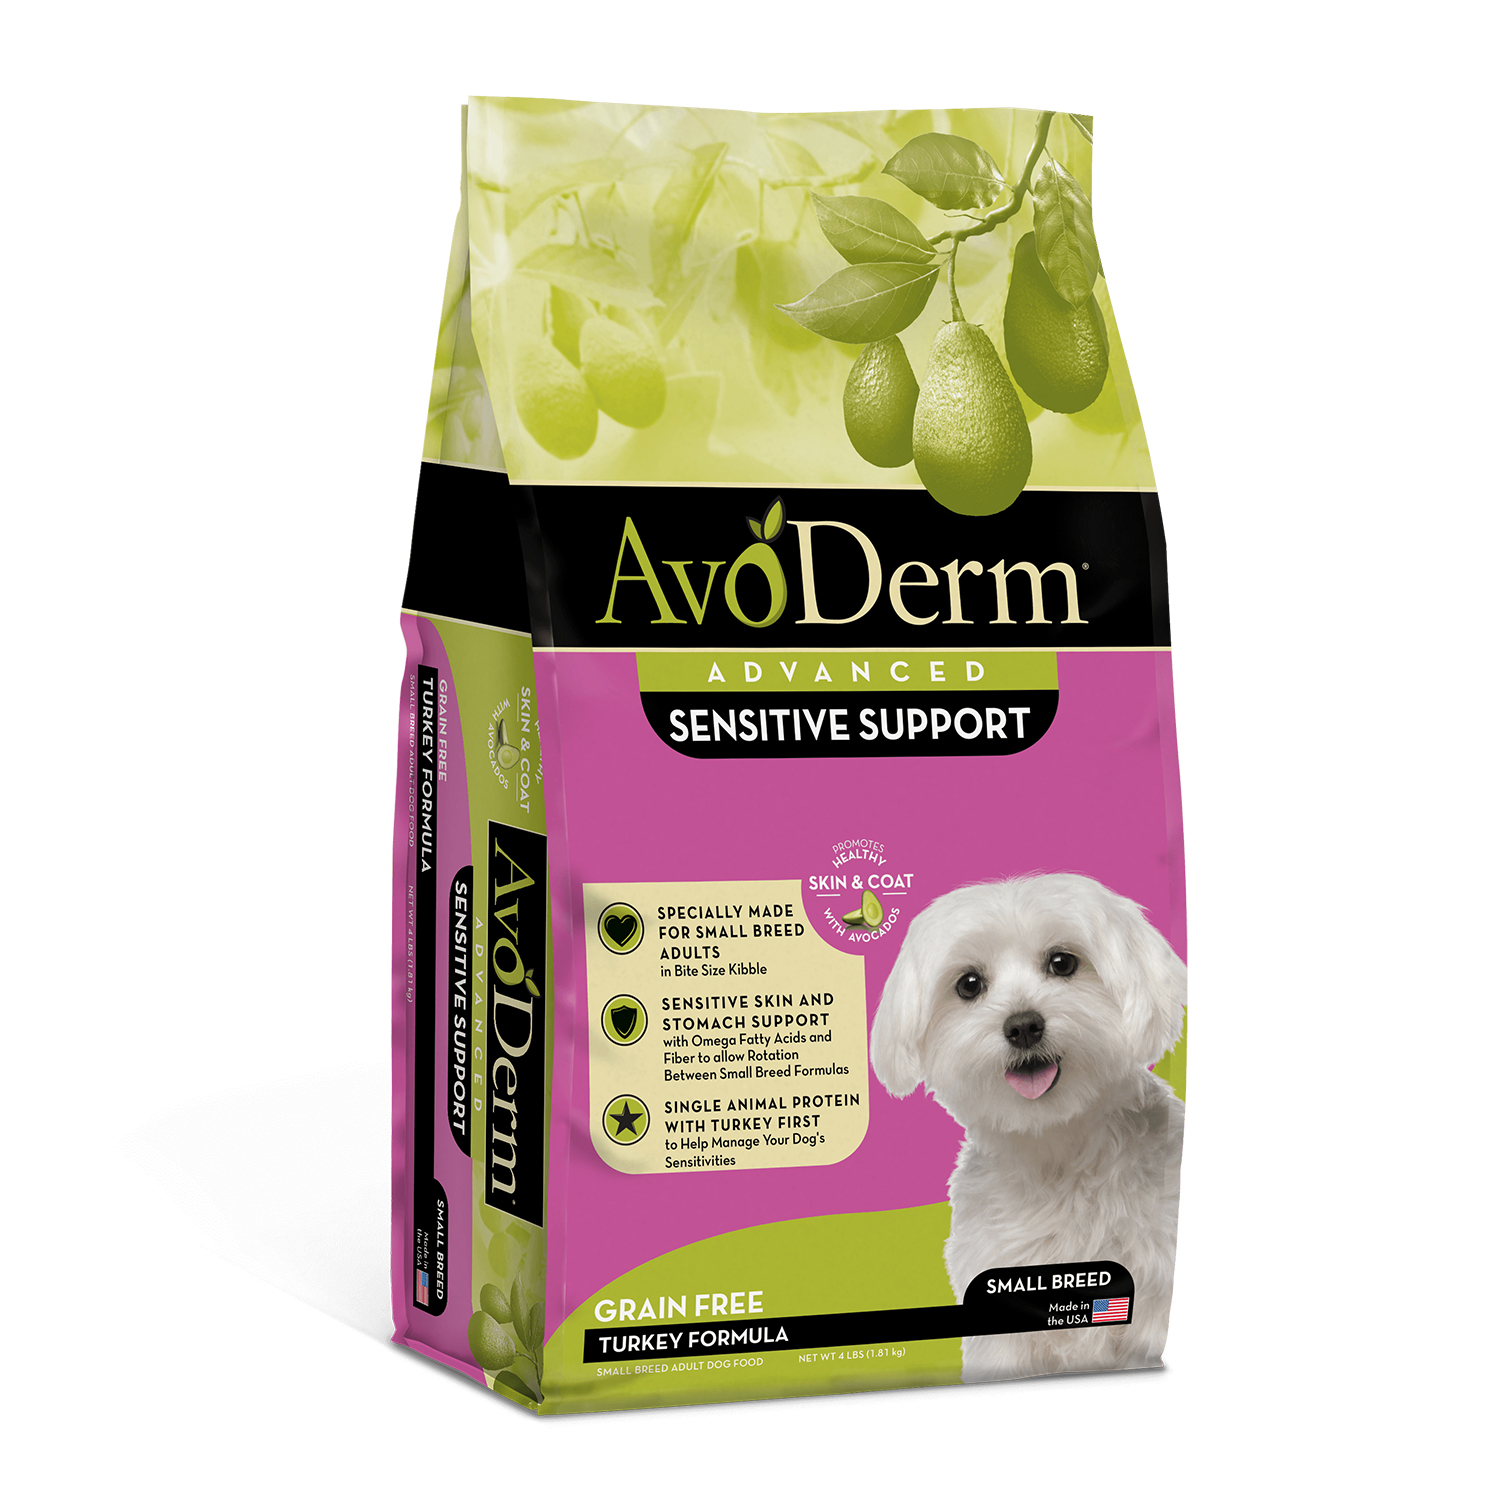 avoderm-advanced-sensitive-support-grain-free-small-breed-turkey-formula-dry-dog-food